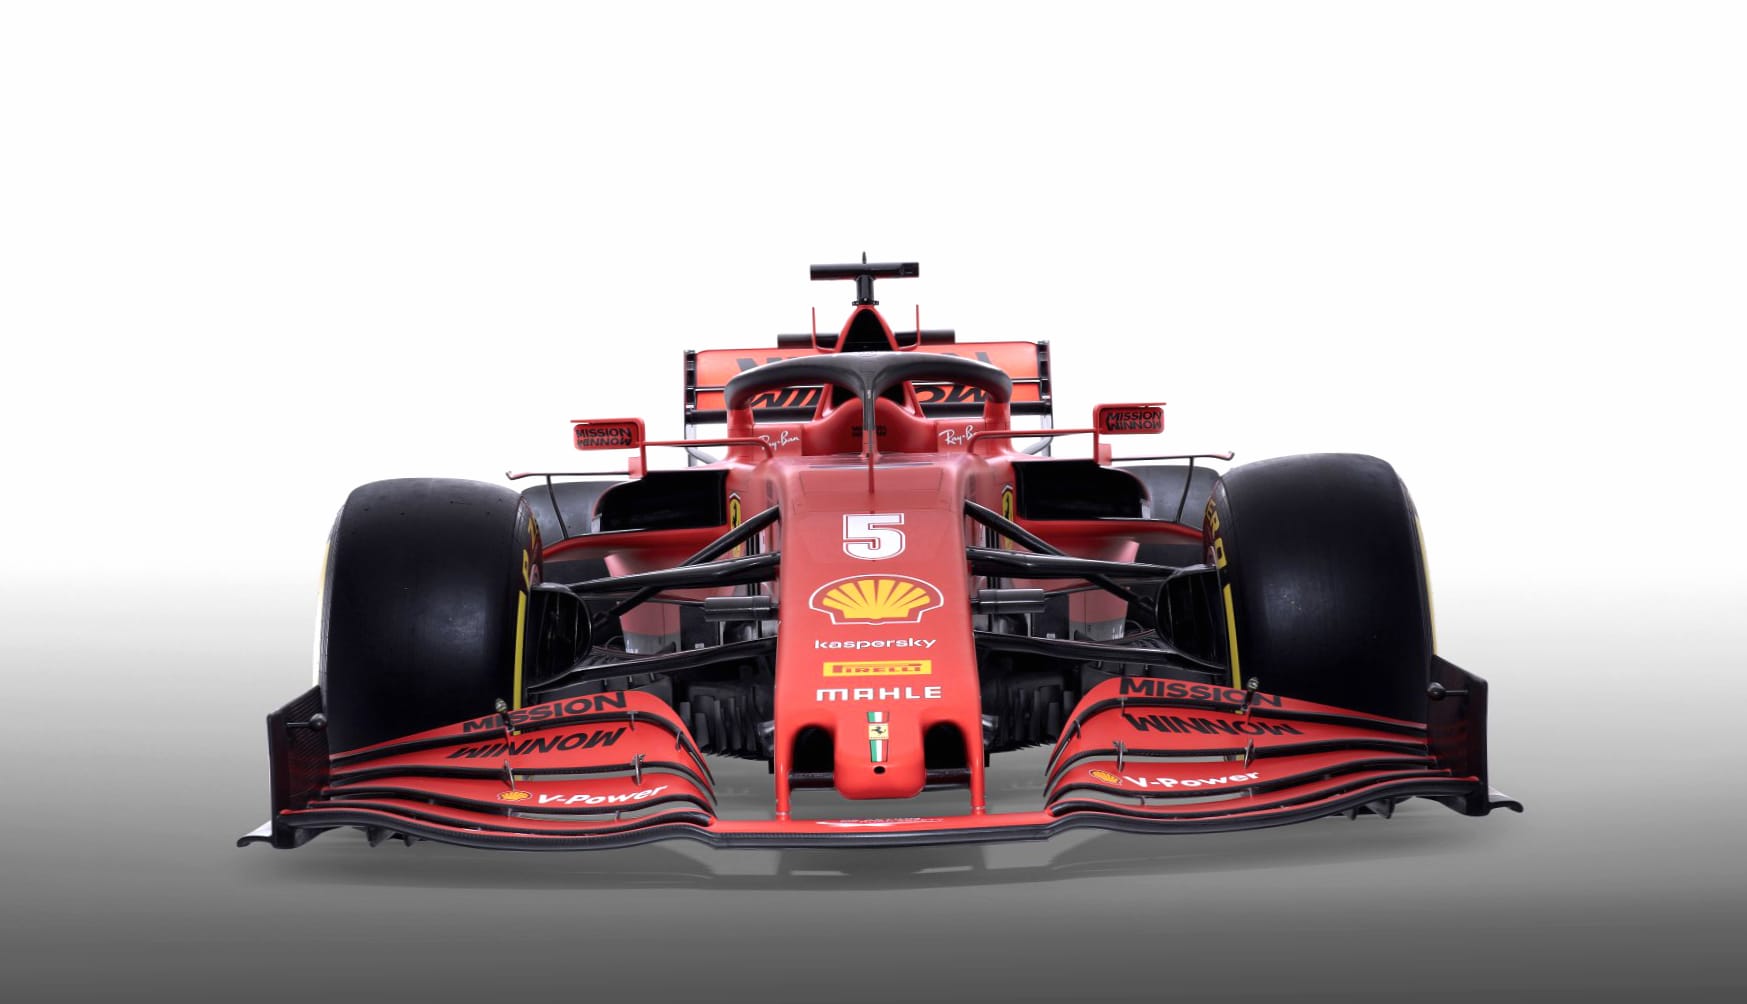 Ferrari SF1000 at 1280 x 960 size wallpapers HD quality